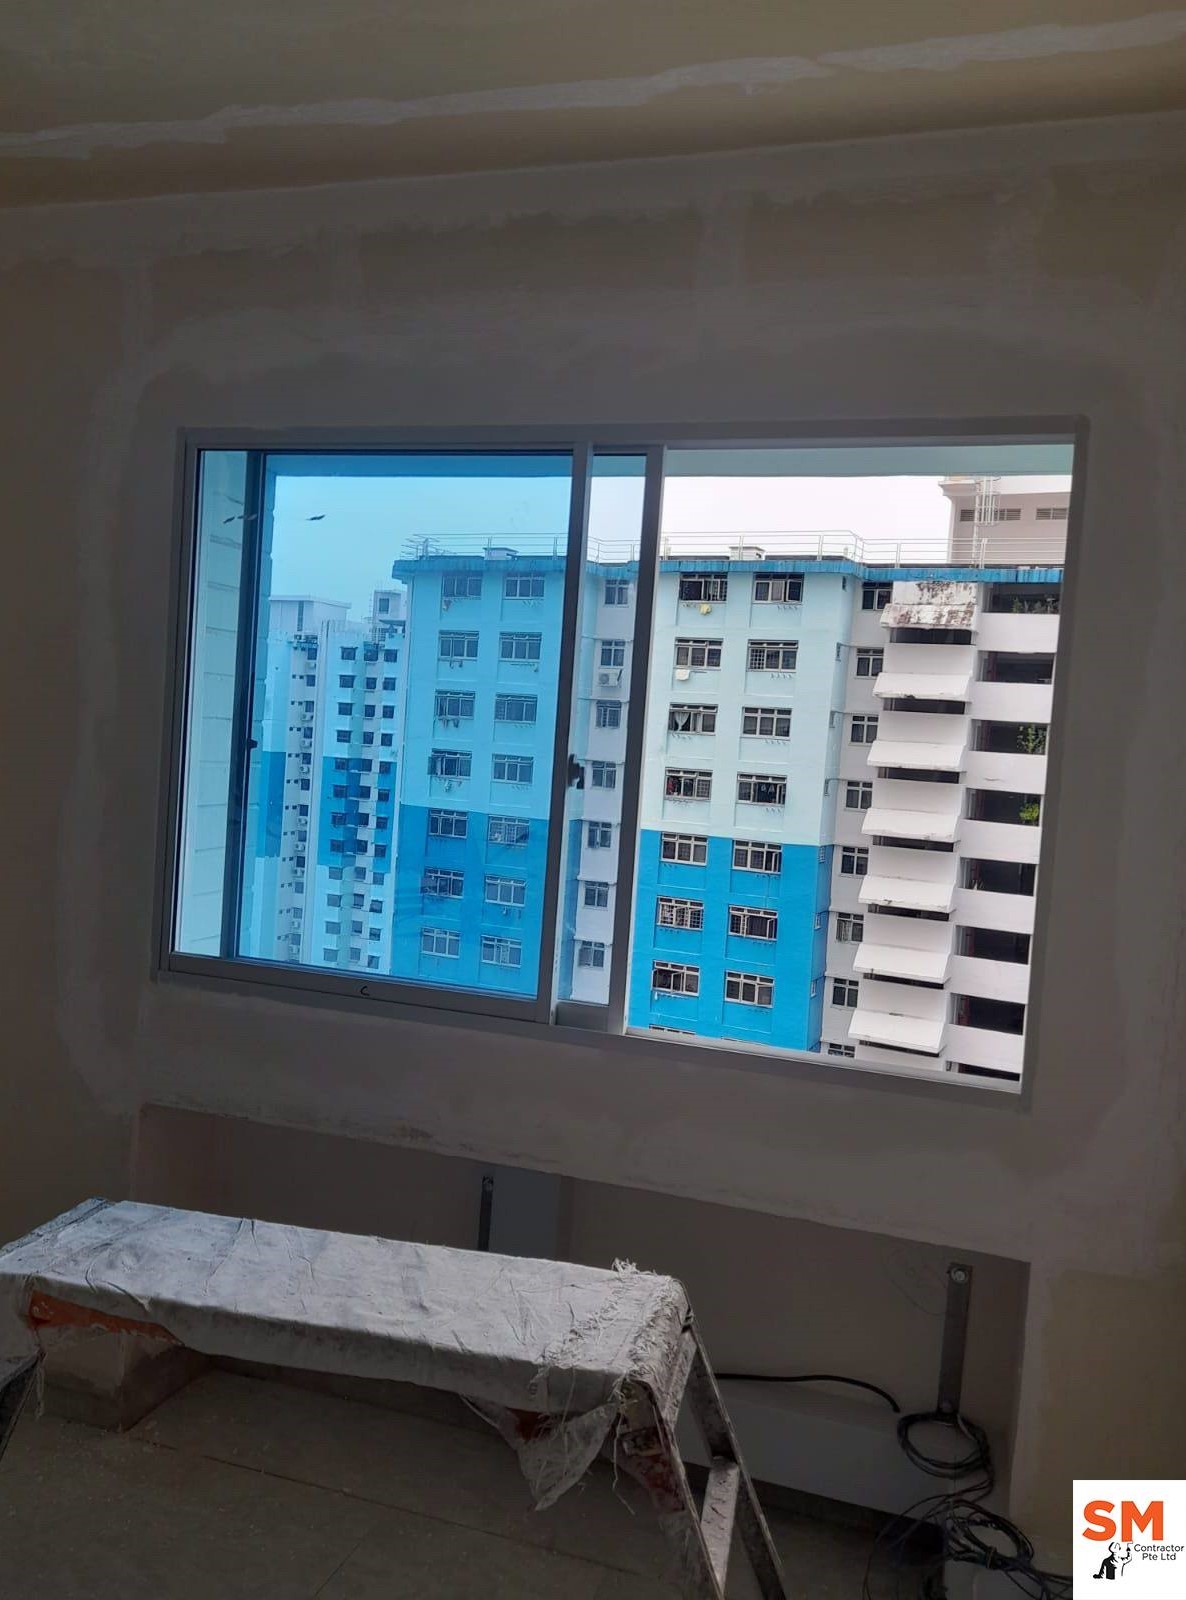 window area plastering